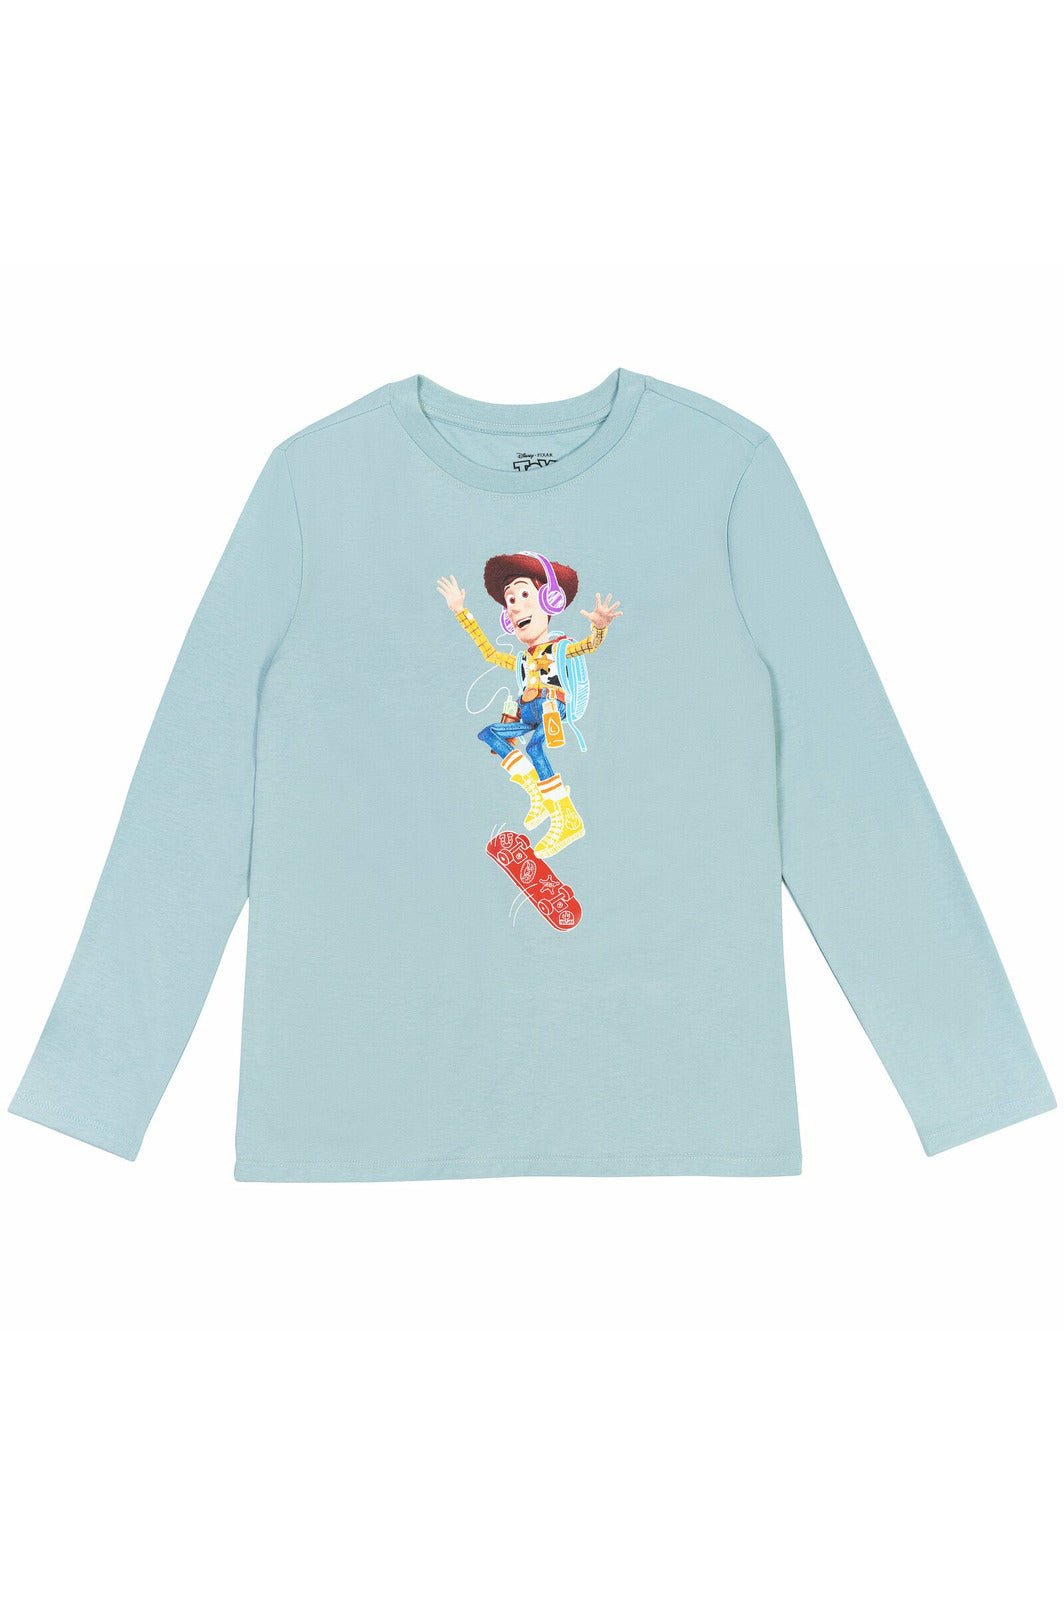 Disney Pixar Toy Story Long Sleeve Graphic T-Shirt - imagikids